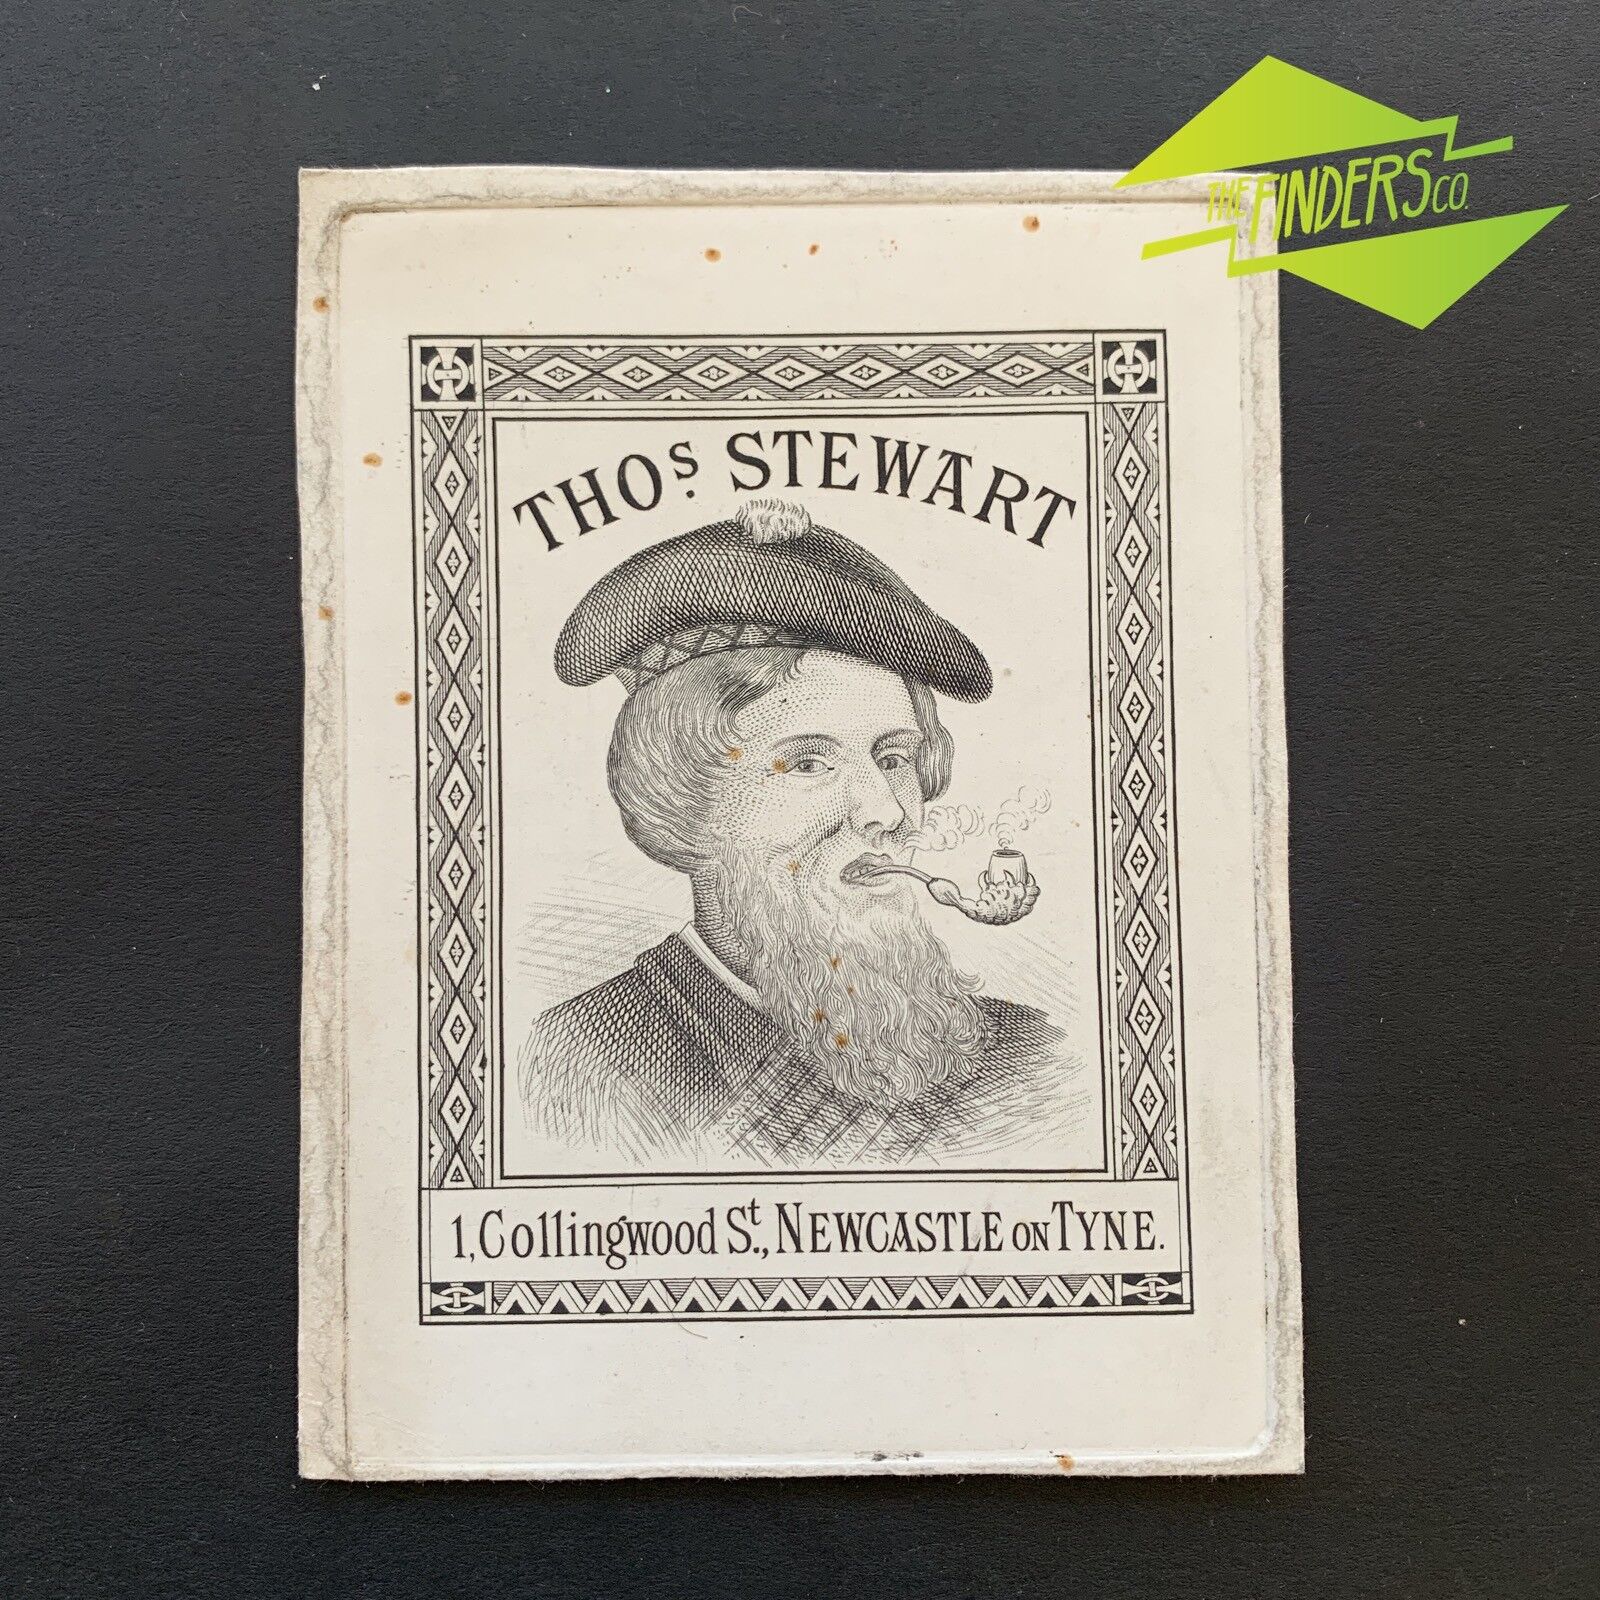 ANTIQUE c.1890 THOMAS STEWART NEWCASTLE UPON TYNE BUSINESS ADVERTISING CARD